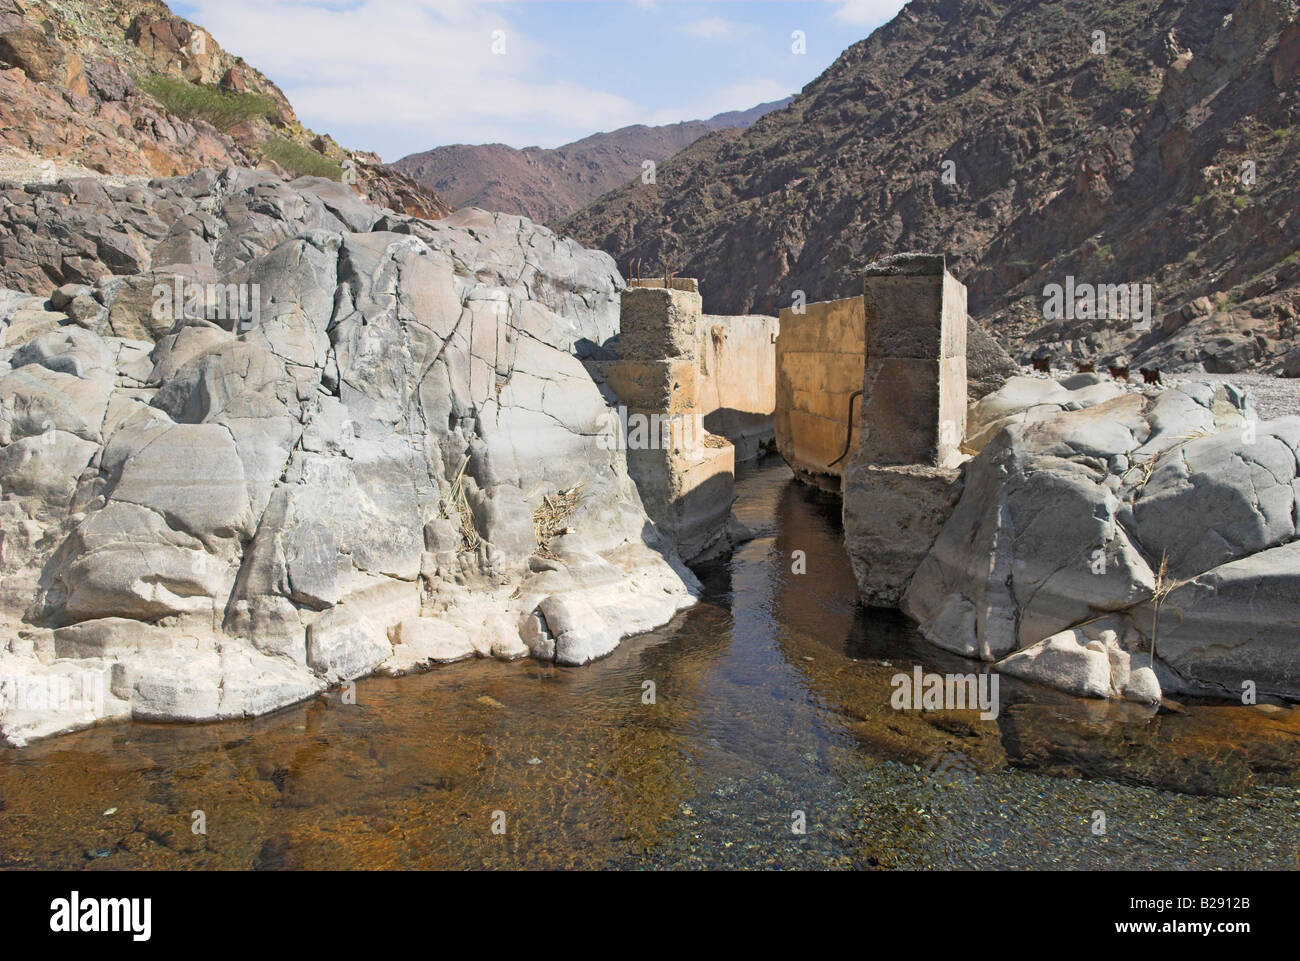 Water runs into a falaj or irrigation channel Wadi al Abyad Oman Stock Photo